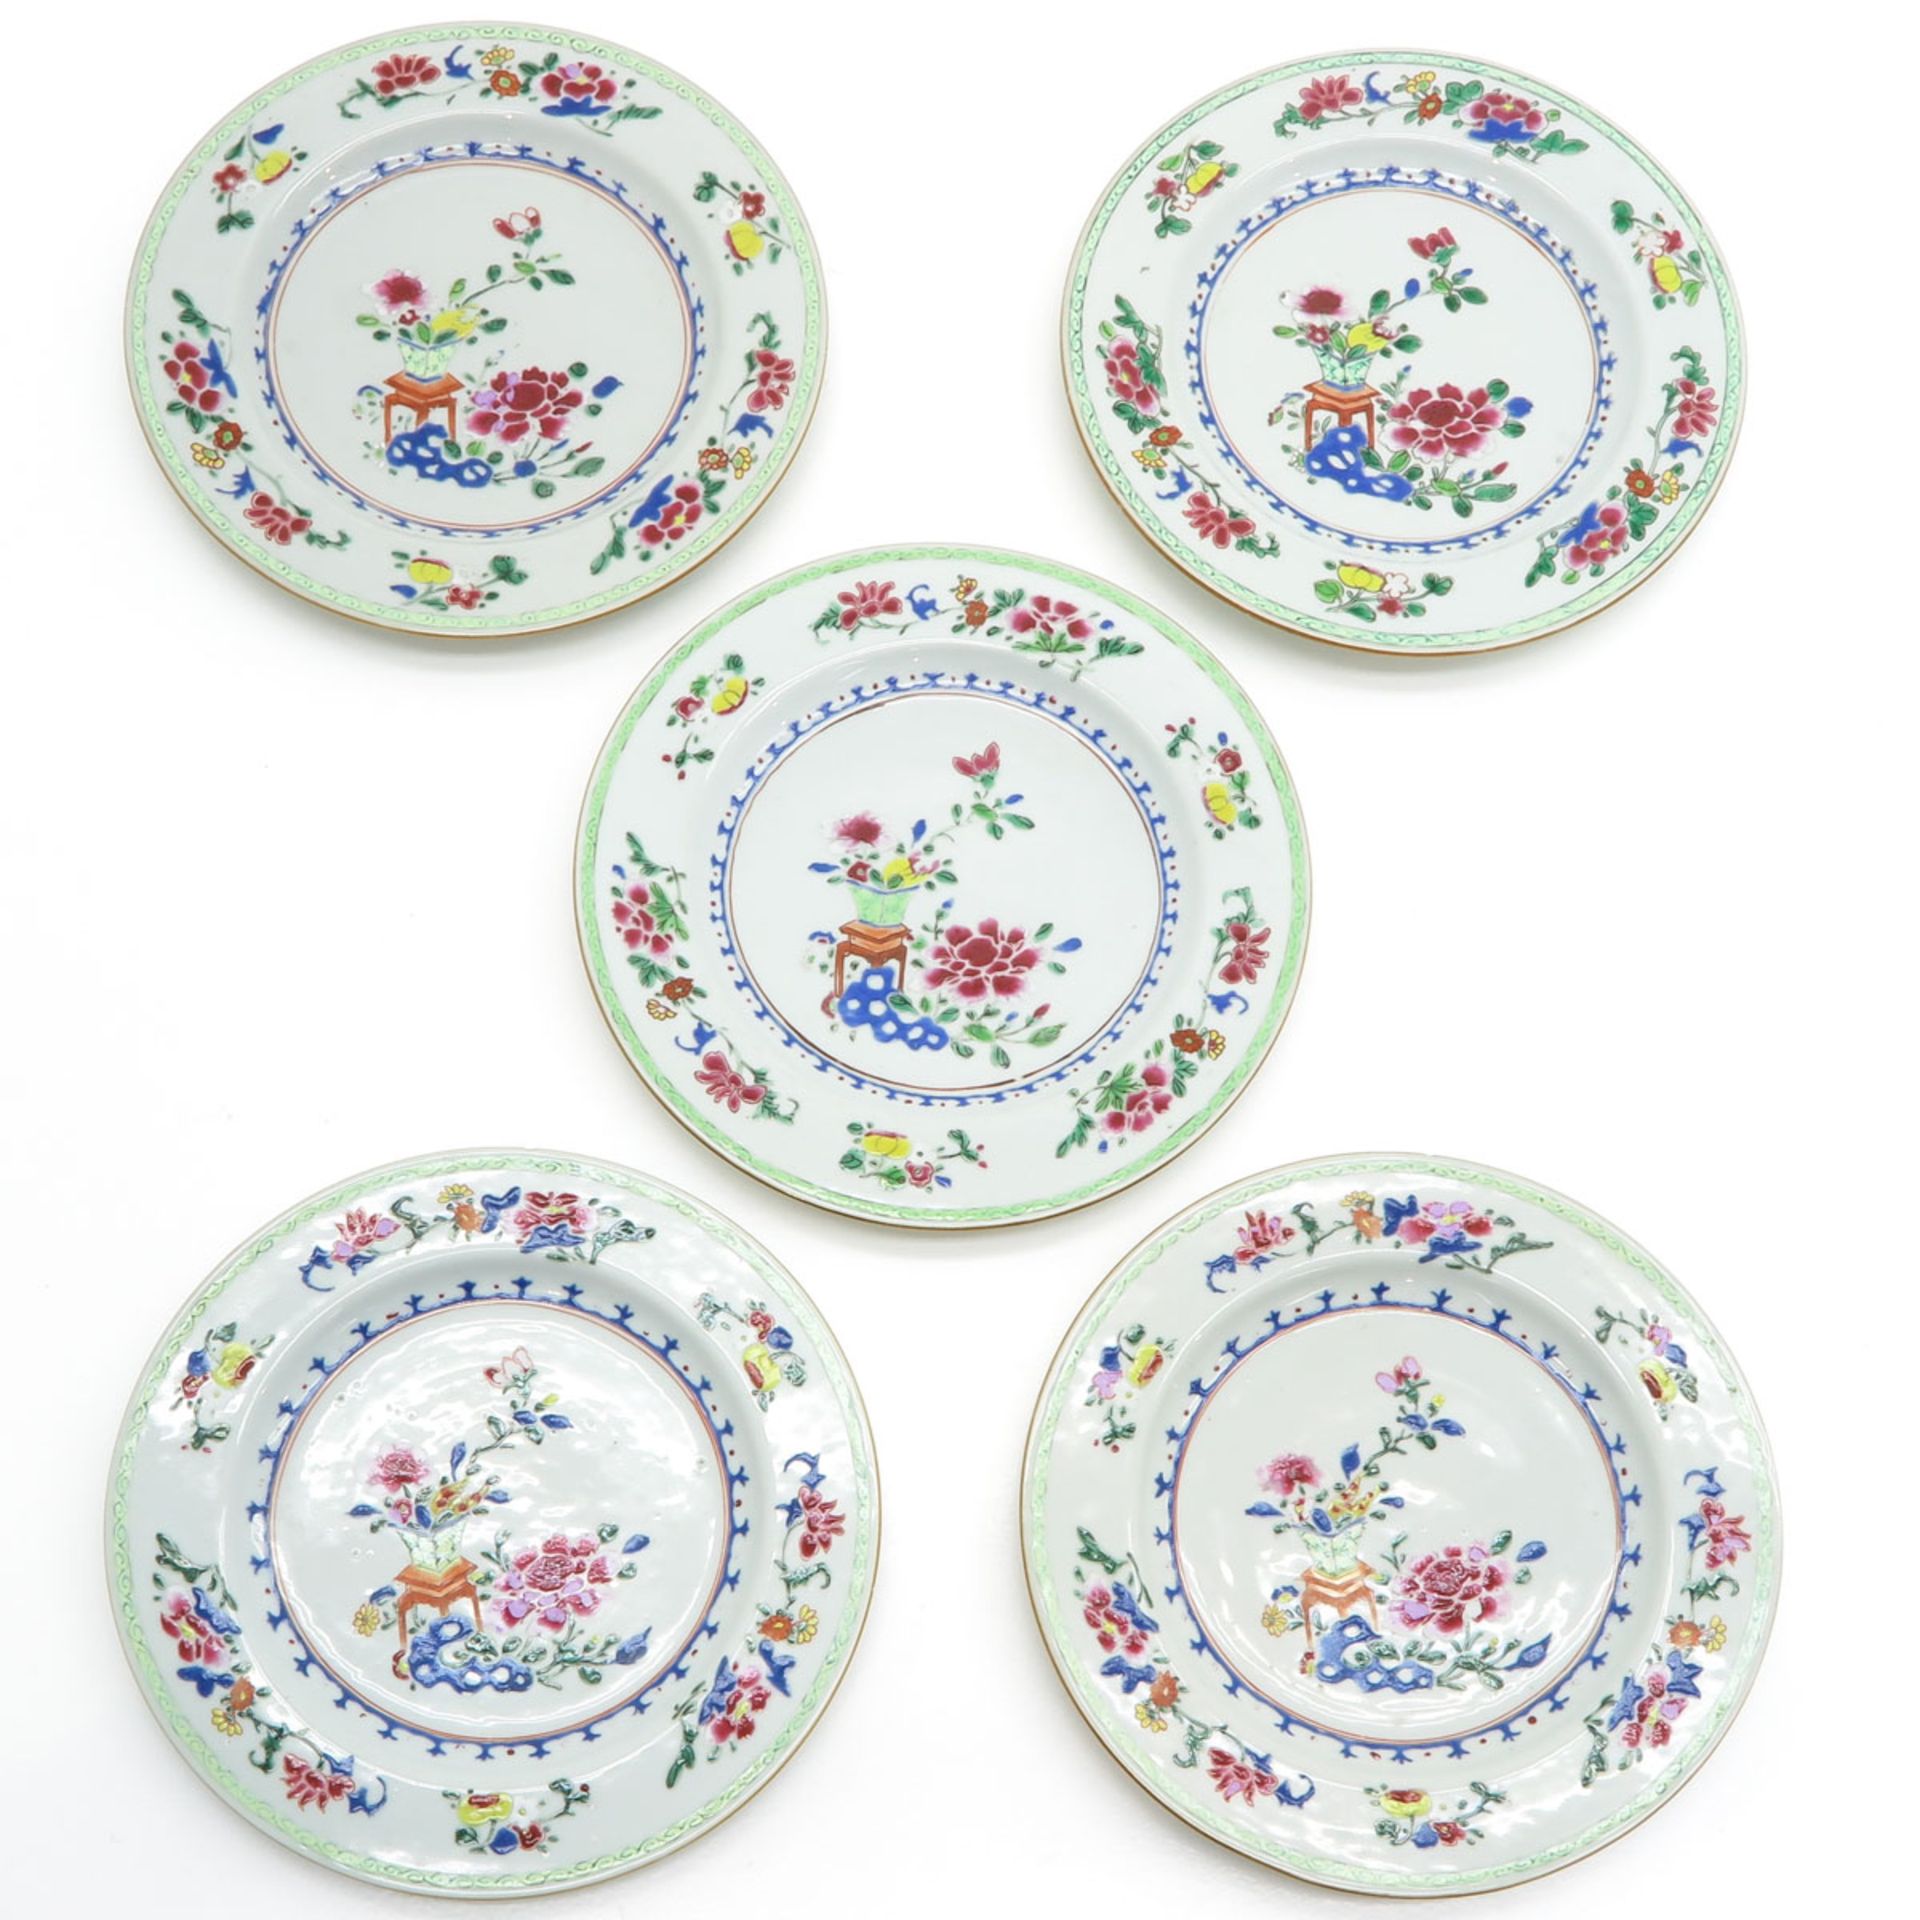 Lot of 5 China Porcelain Polychrome Decor Plates